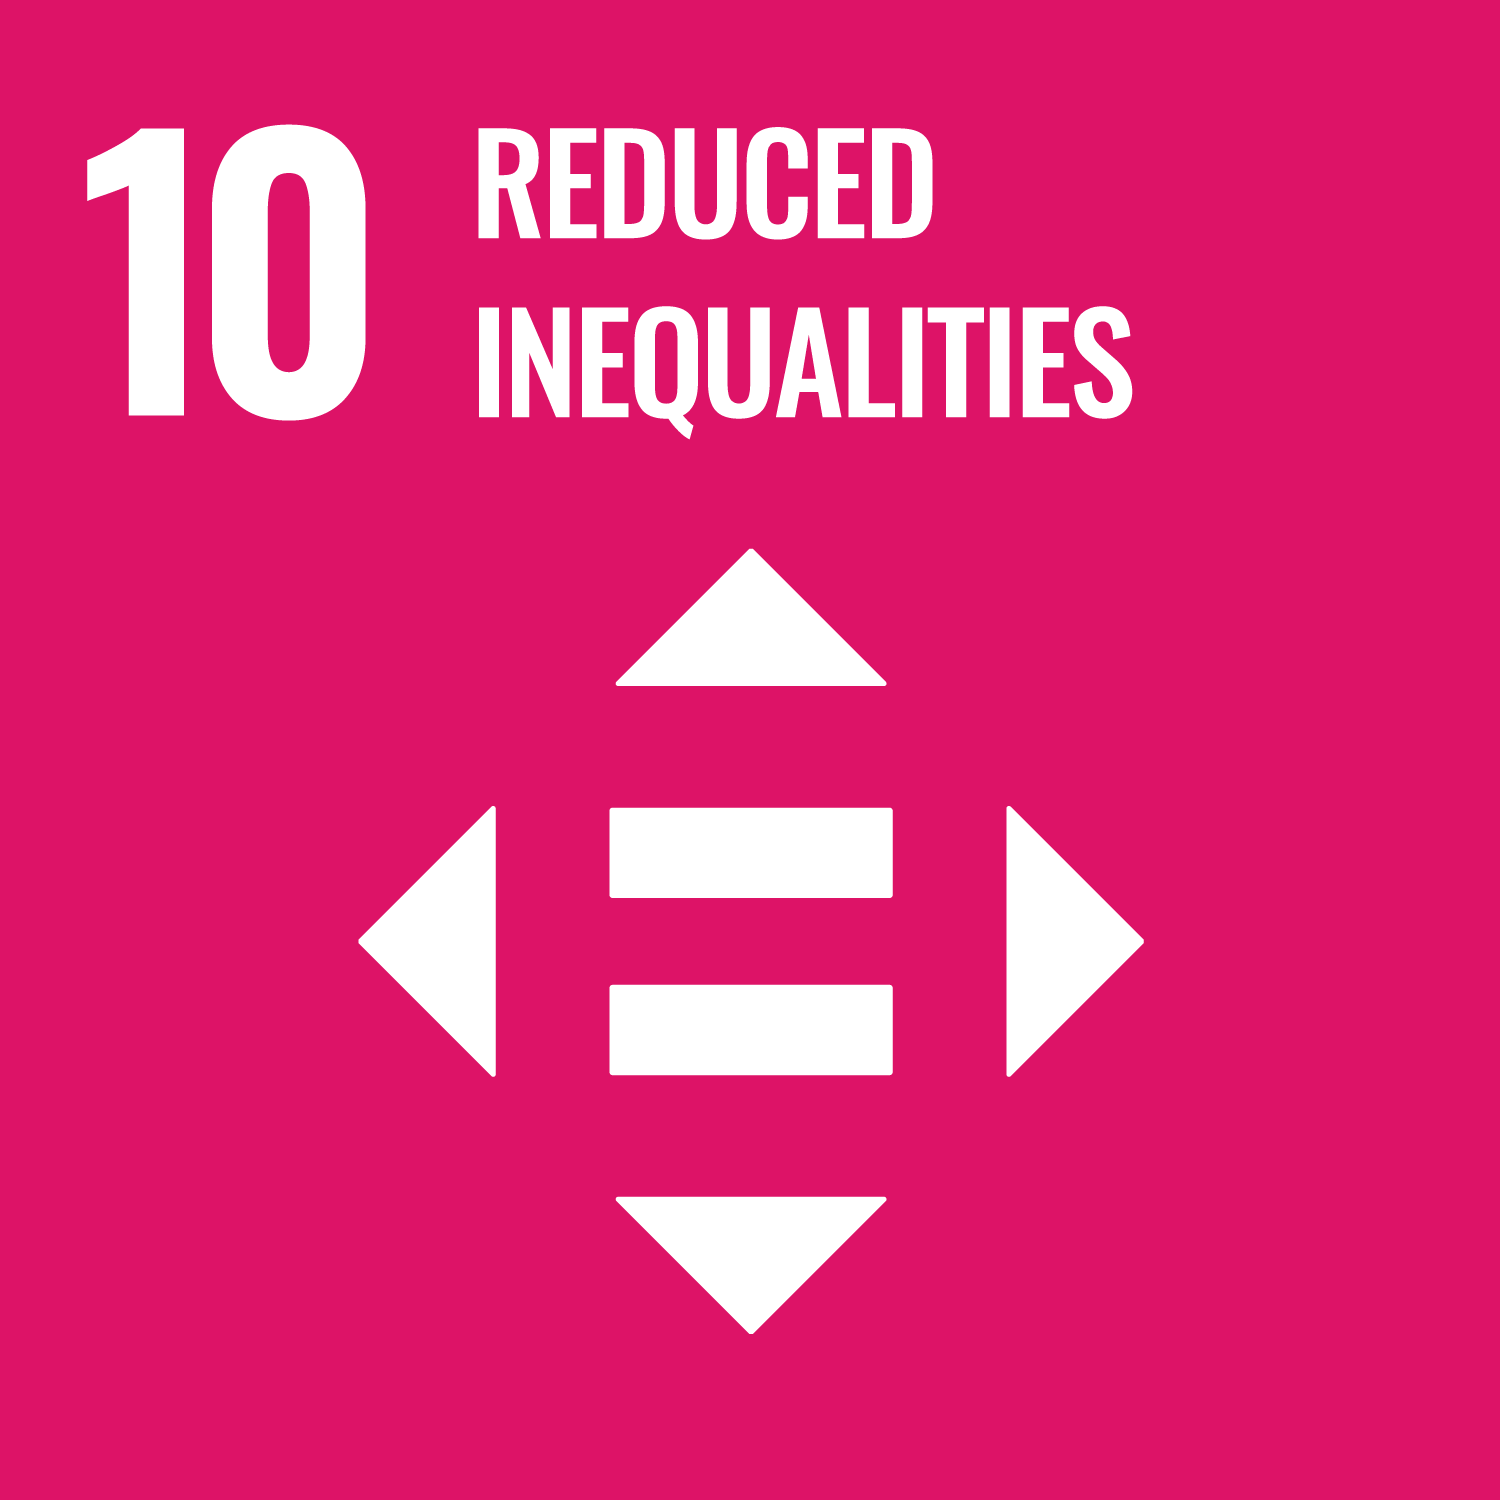 United Nations Sustainable Development Goal 10